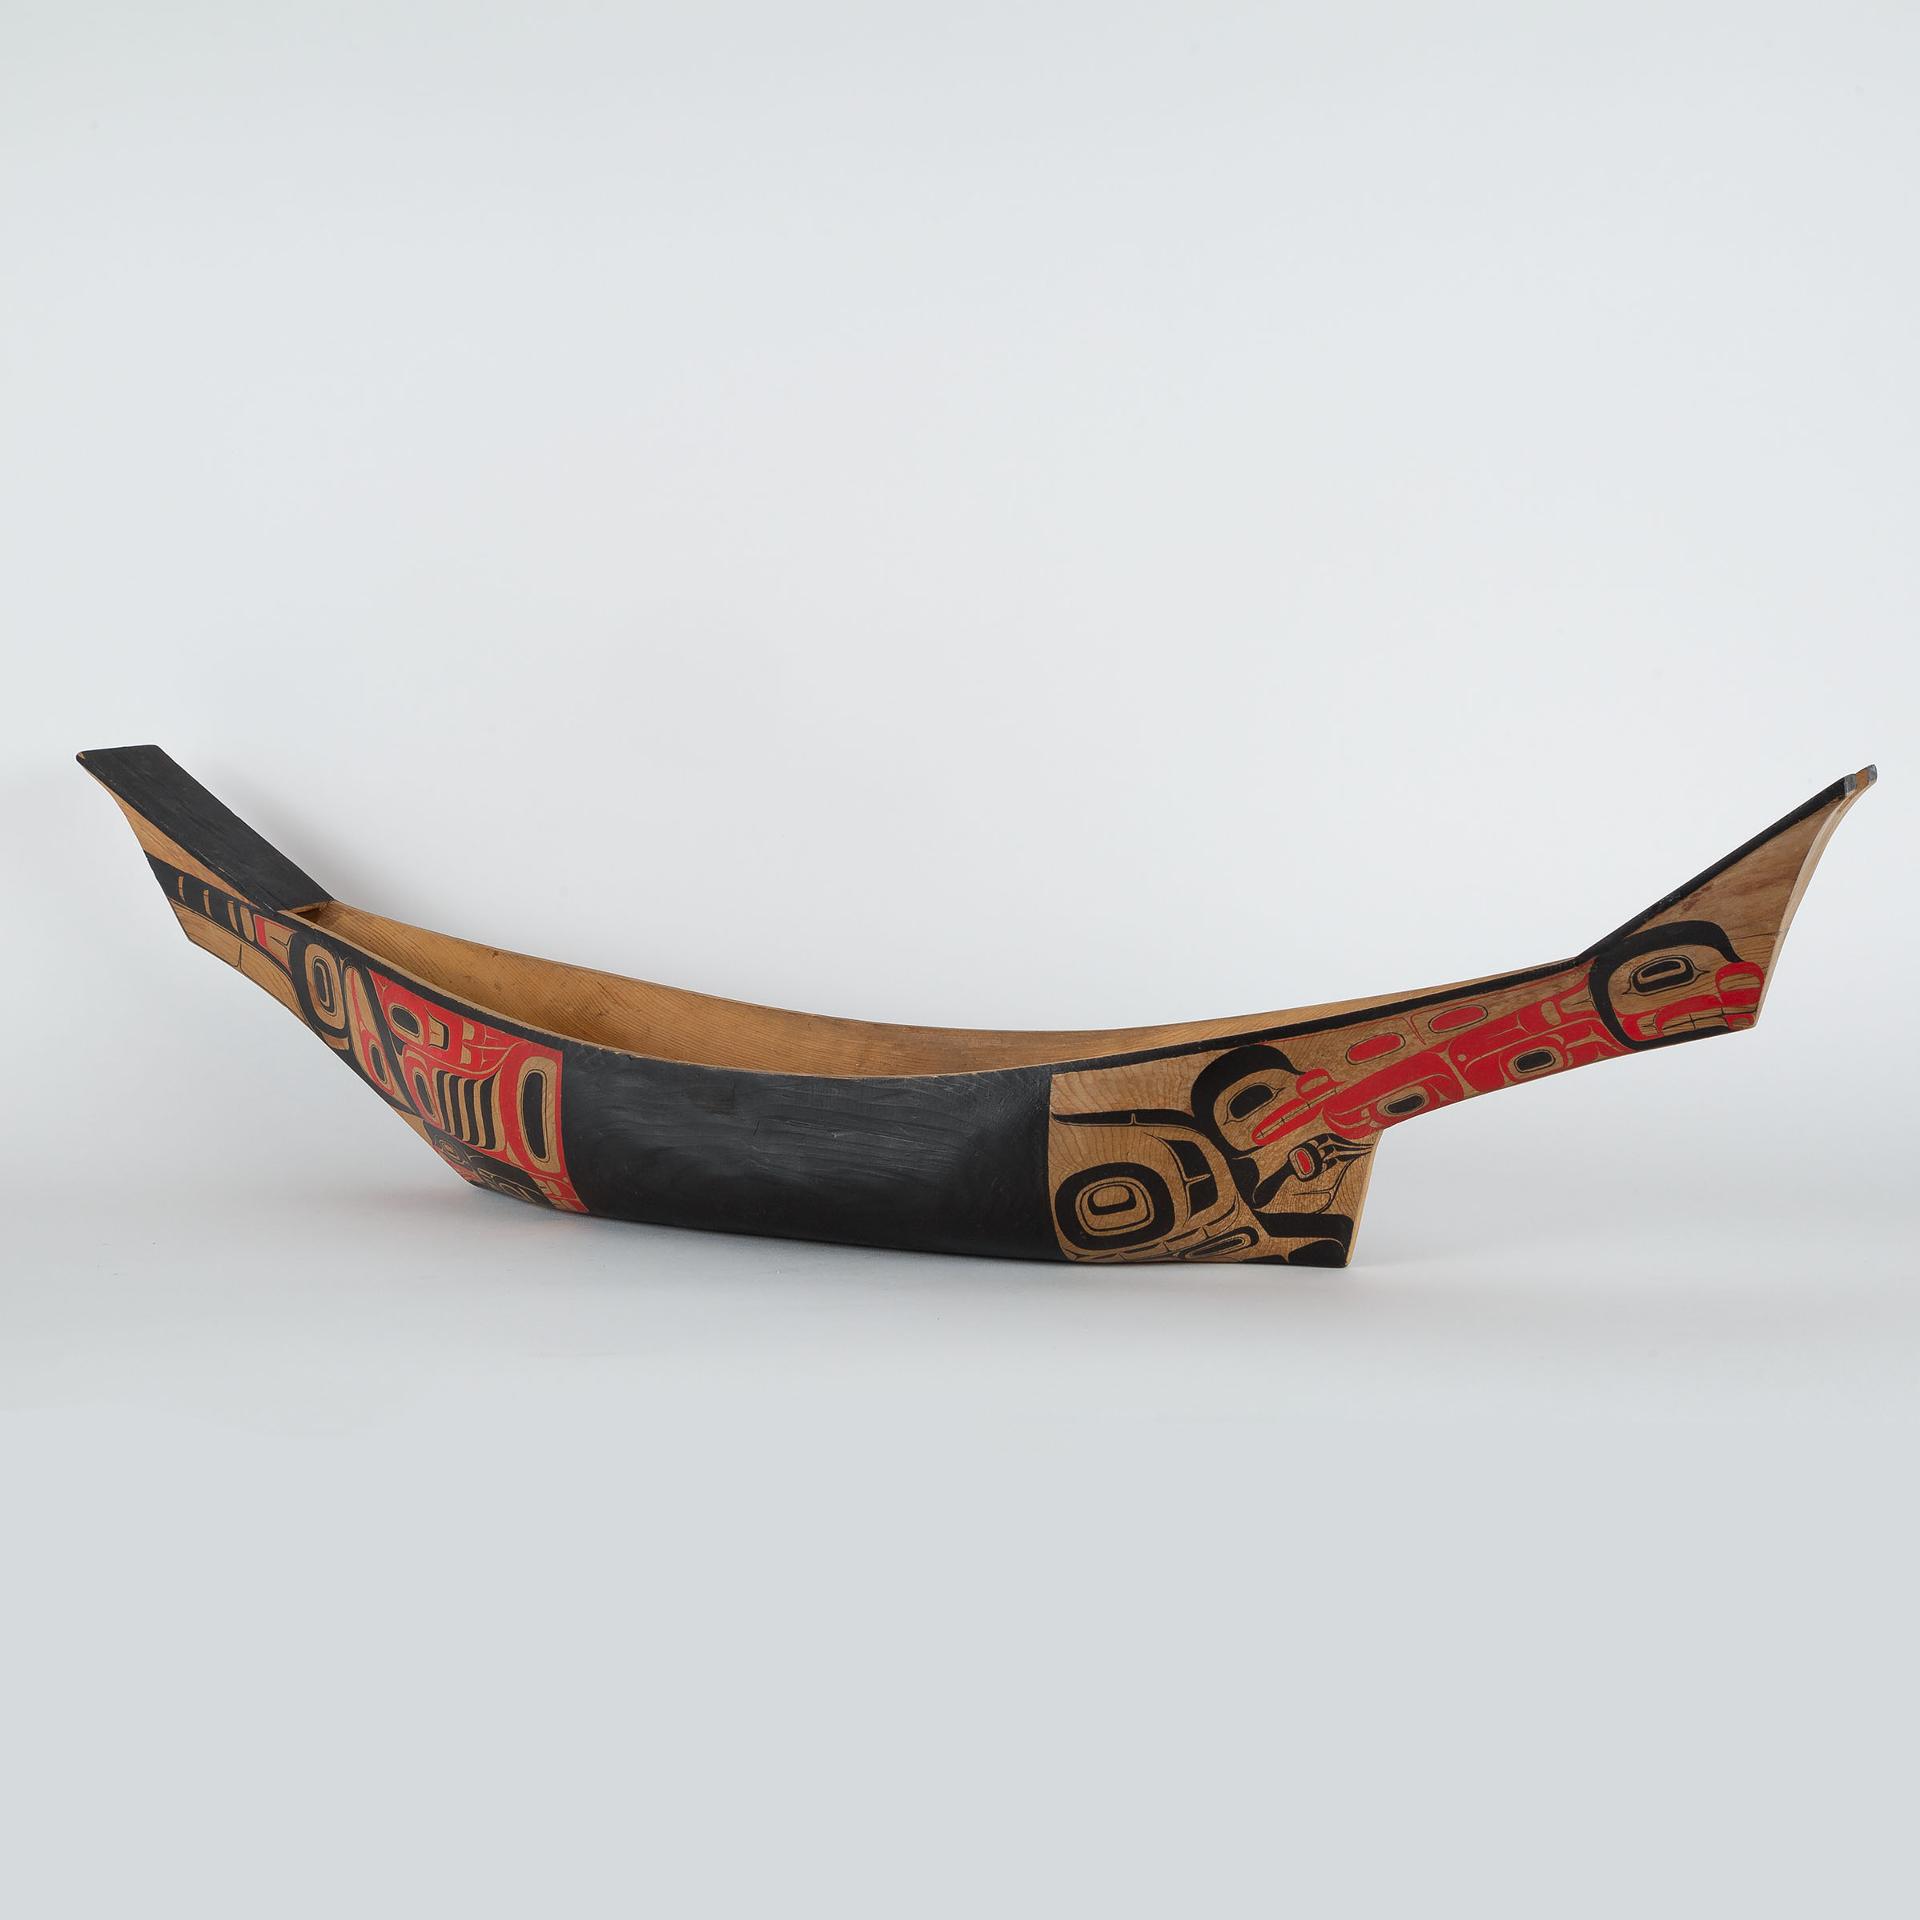 Jay Simeon (1976) - Model Canoe